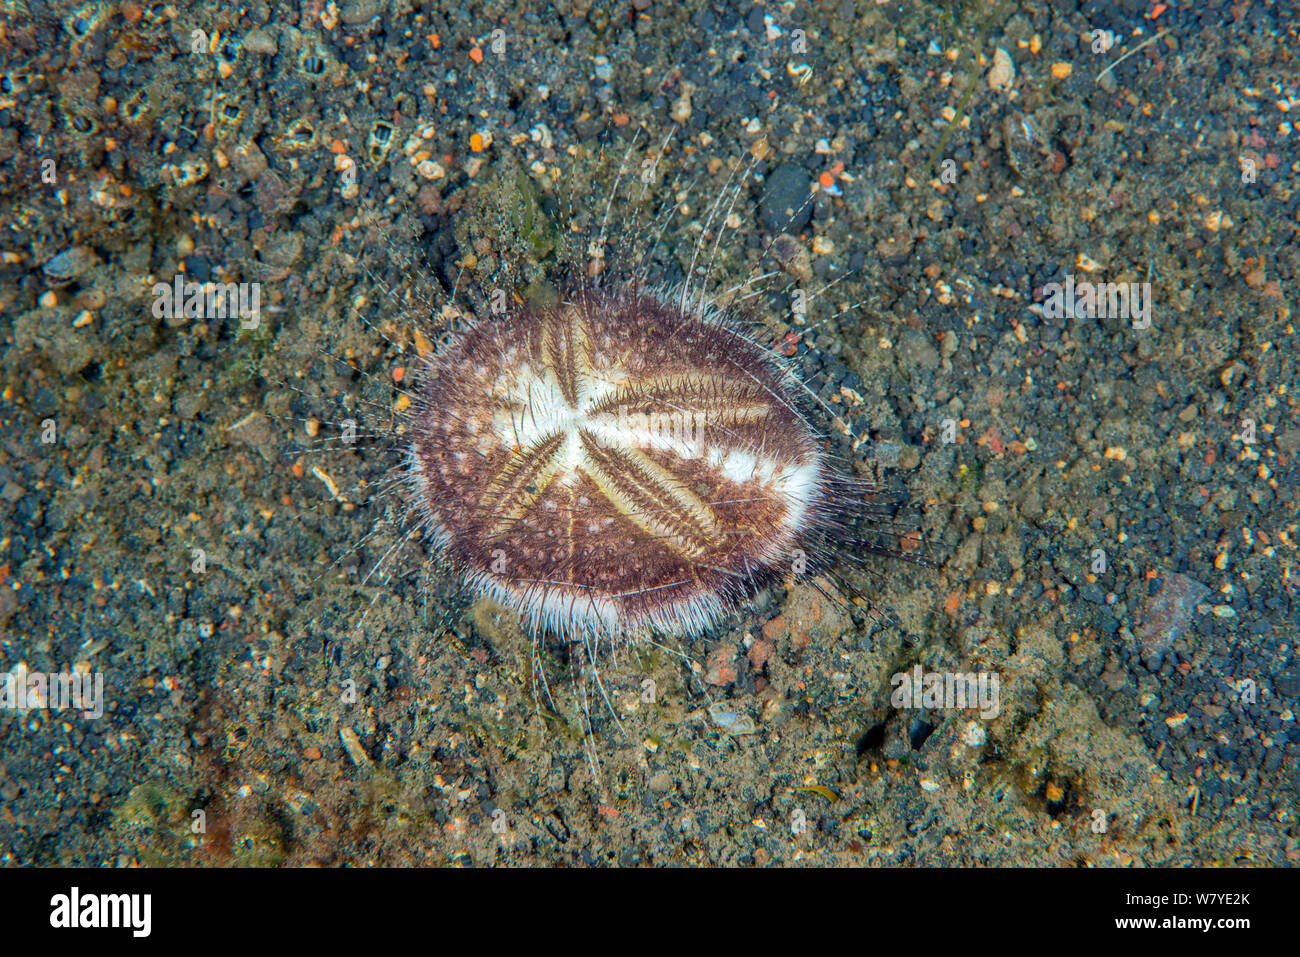 Longspine heart urchin (Maretia planulata) burrowing into the sand, Lembeh Strait, North Sulawesi, Indonesia. Stock Photo